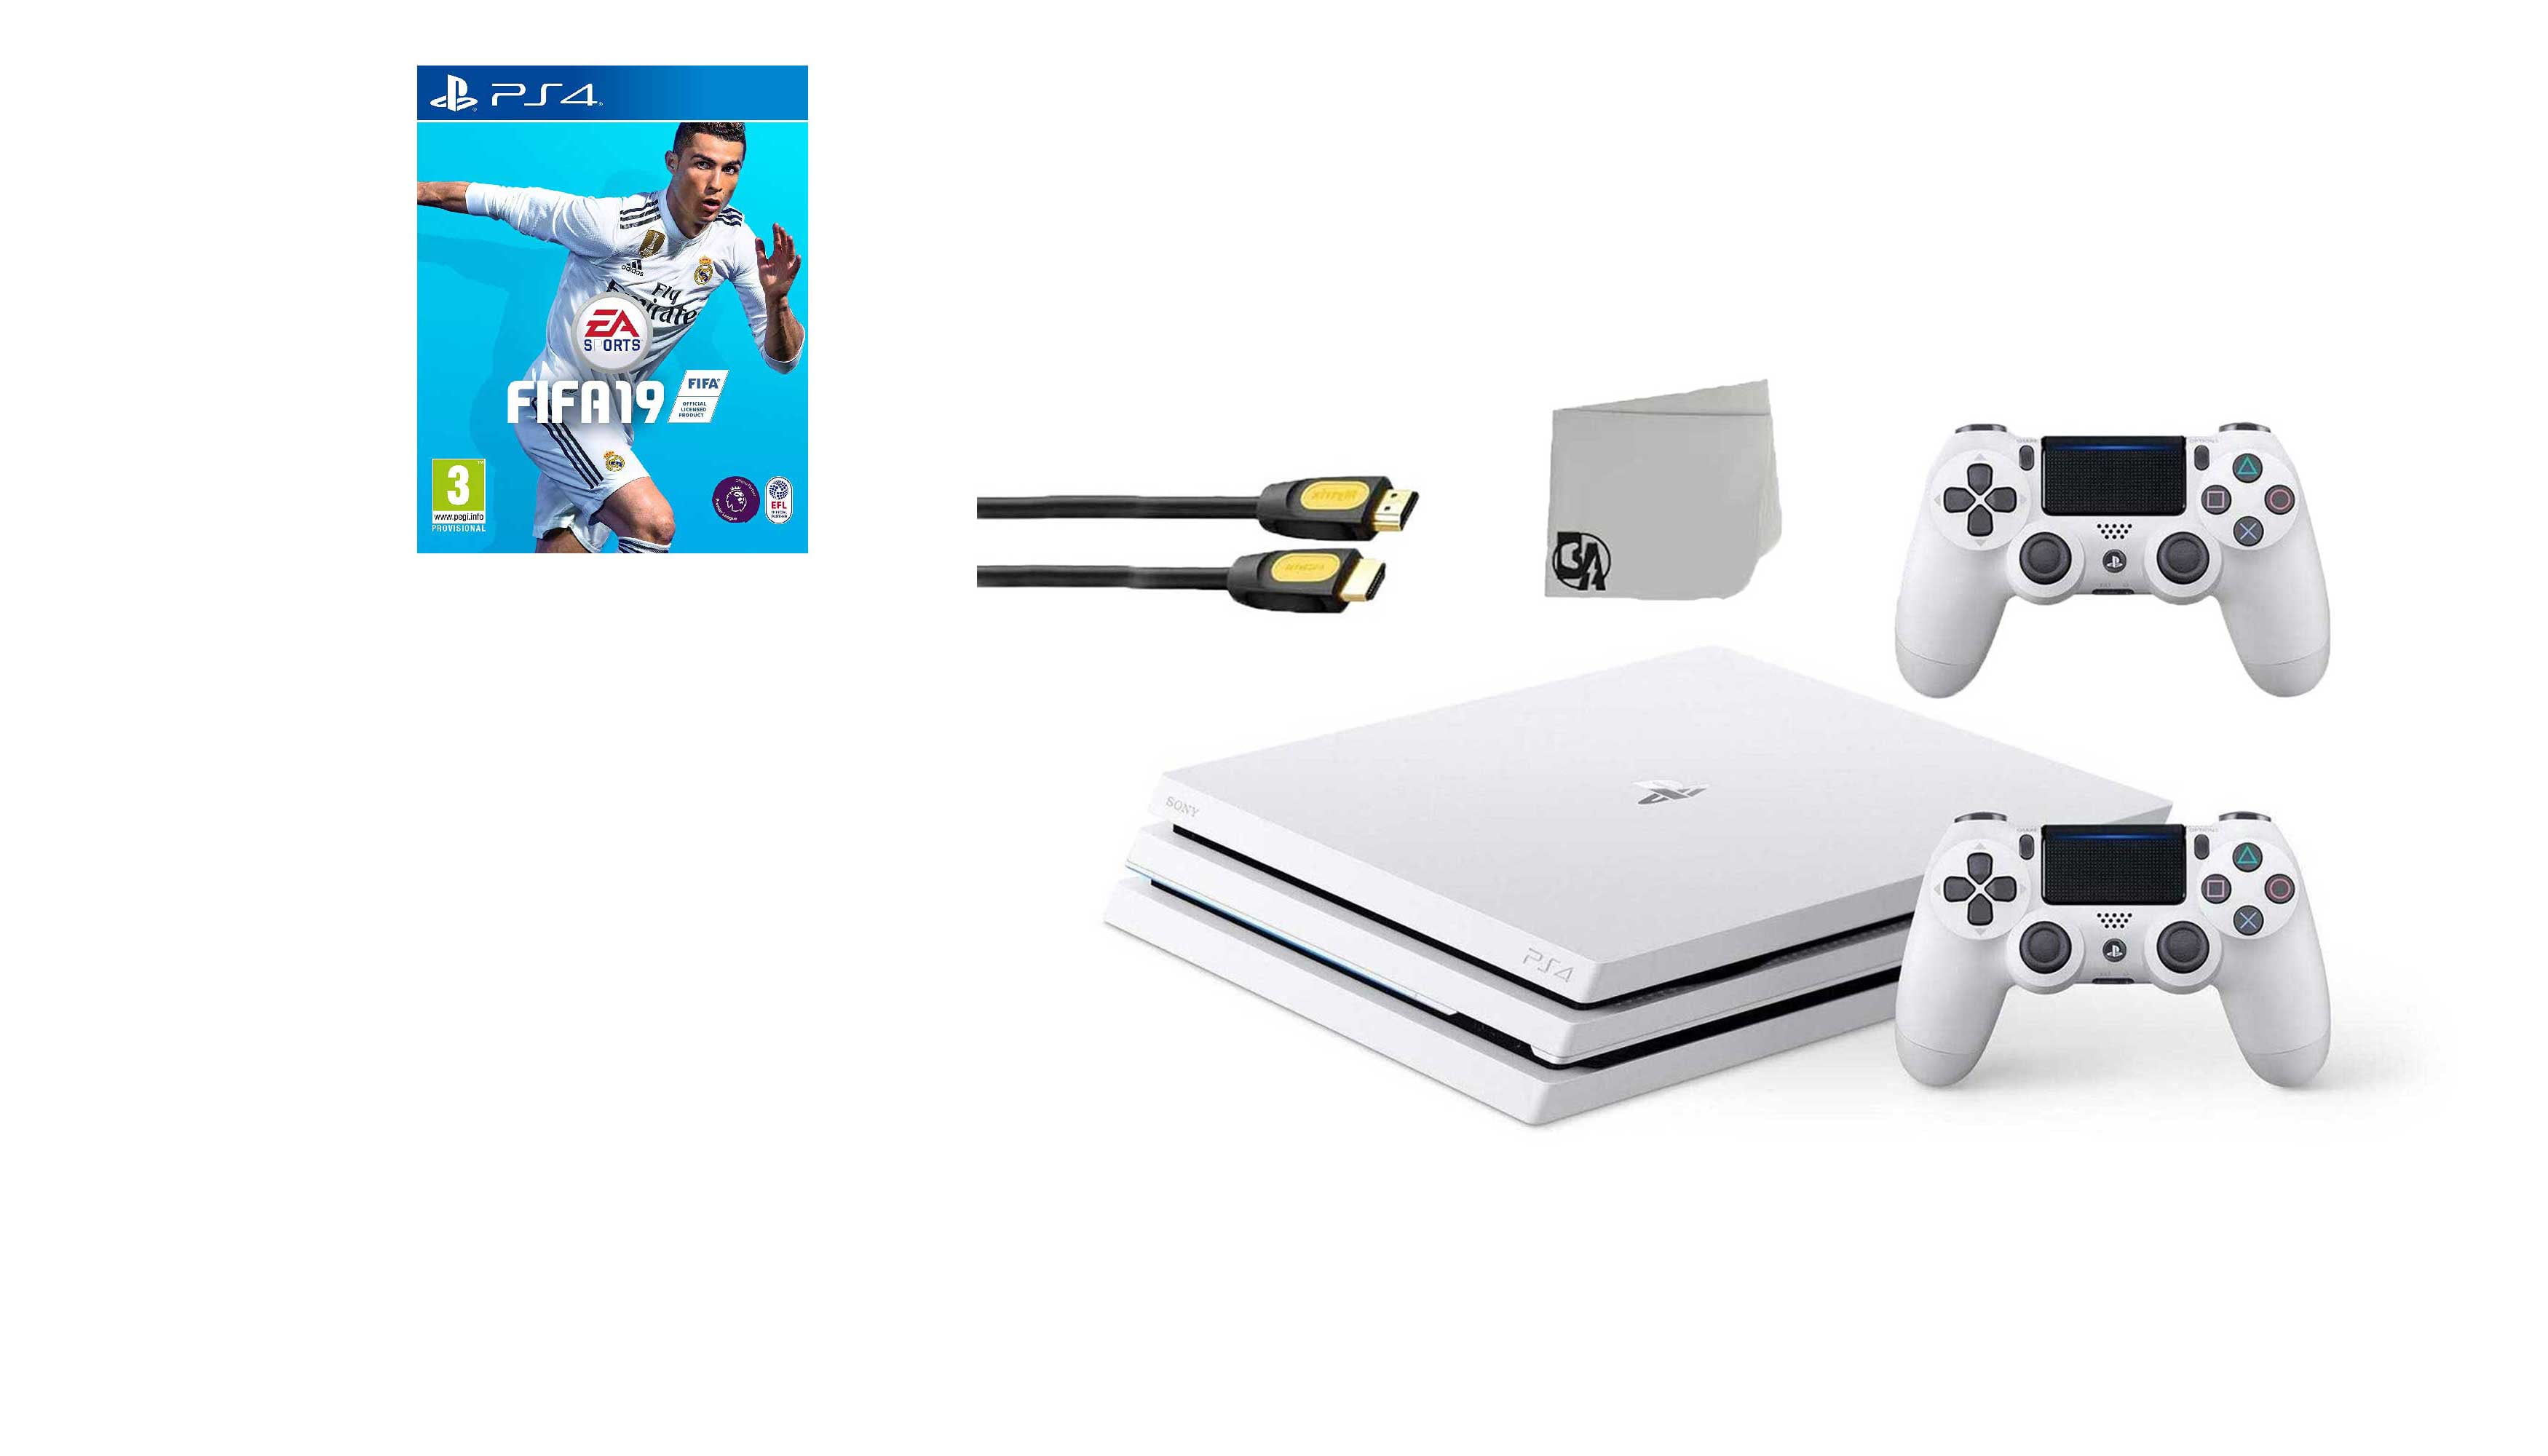 Sony PlayStation 4 Pro Glacier 1TB Consol White 2 Controller Included FIFA-19 BOLT AXTION Bundle - Walmart.com